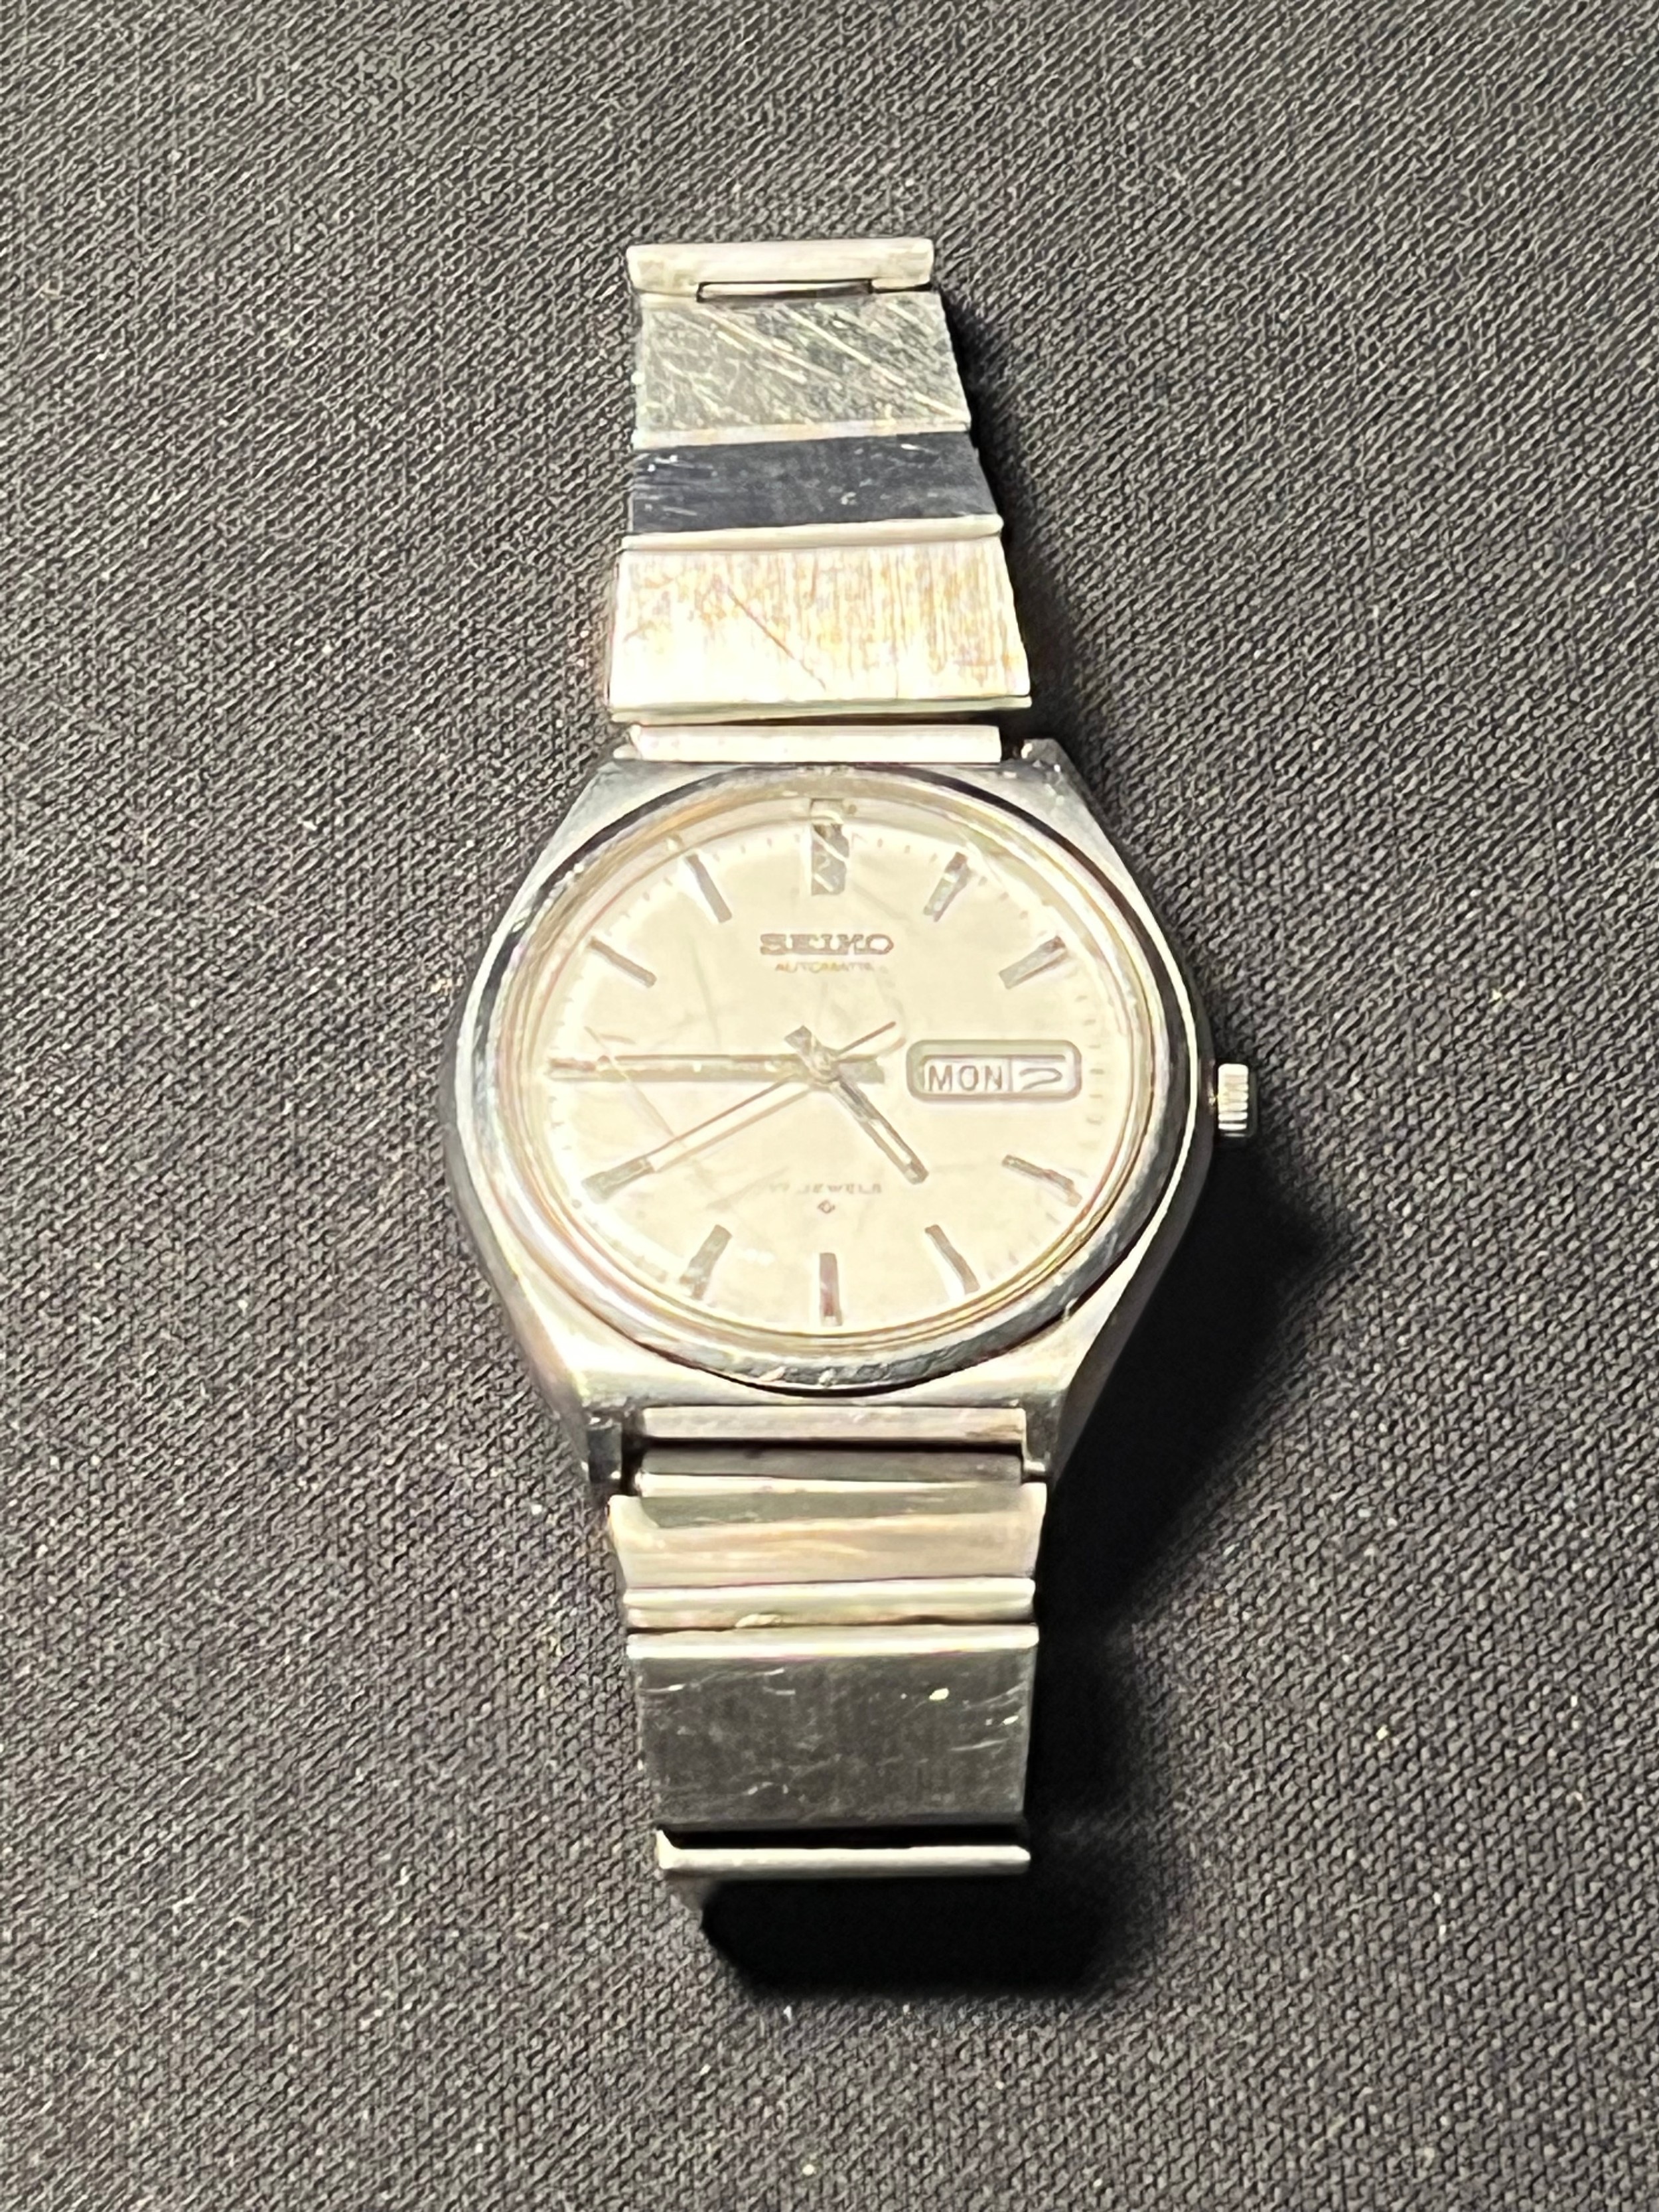 Vintage 1970's/80's Seiko 6309-8300 automatic wrist watch.